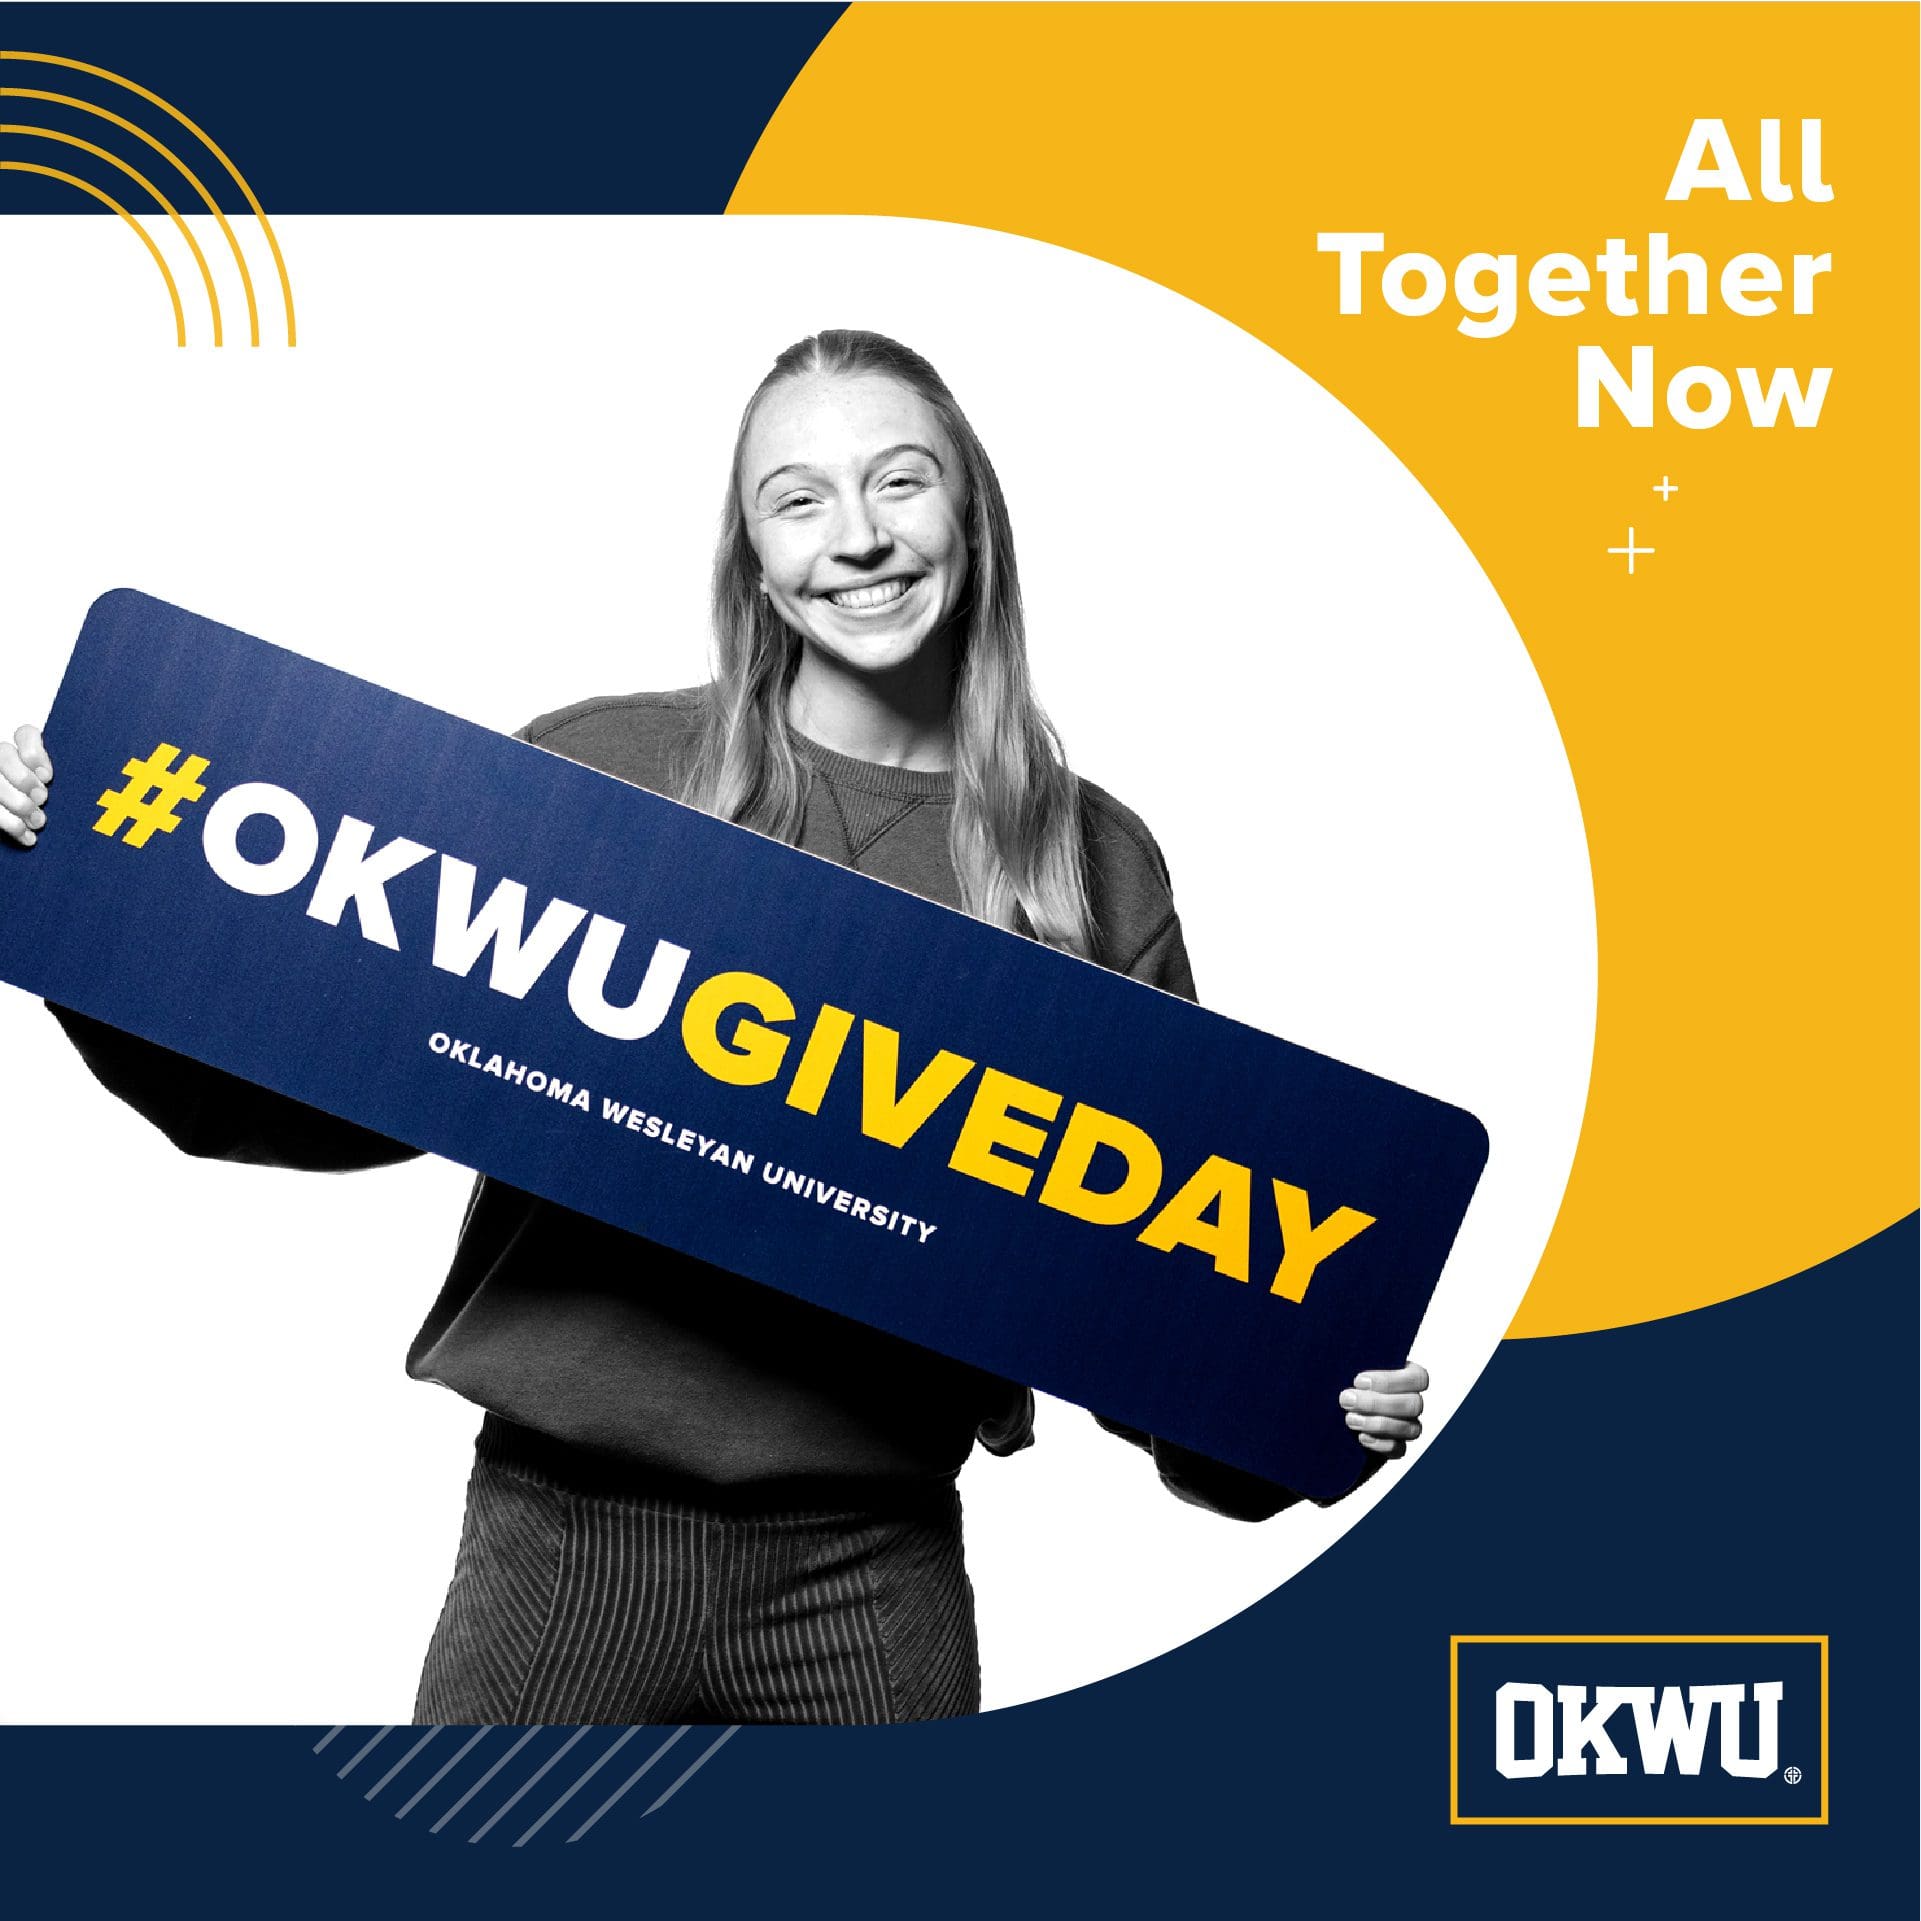 Thank you! #okwugiveday